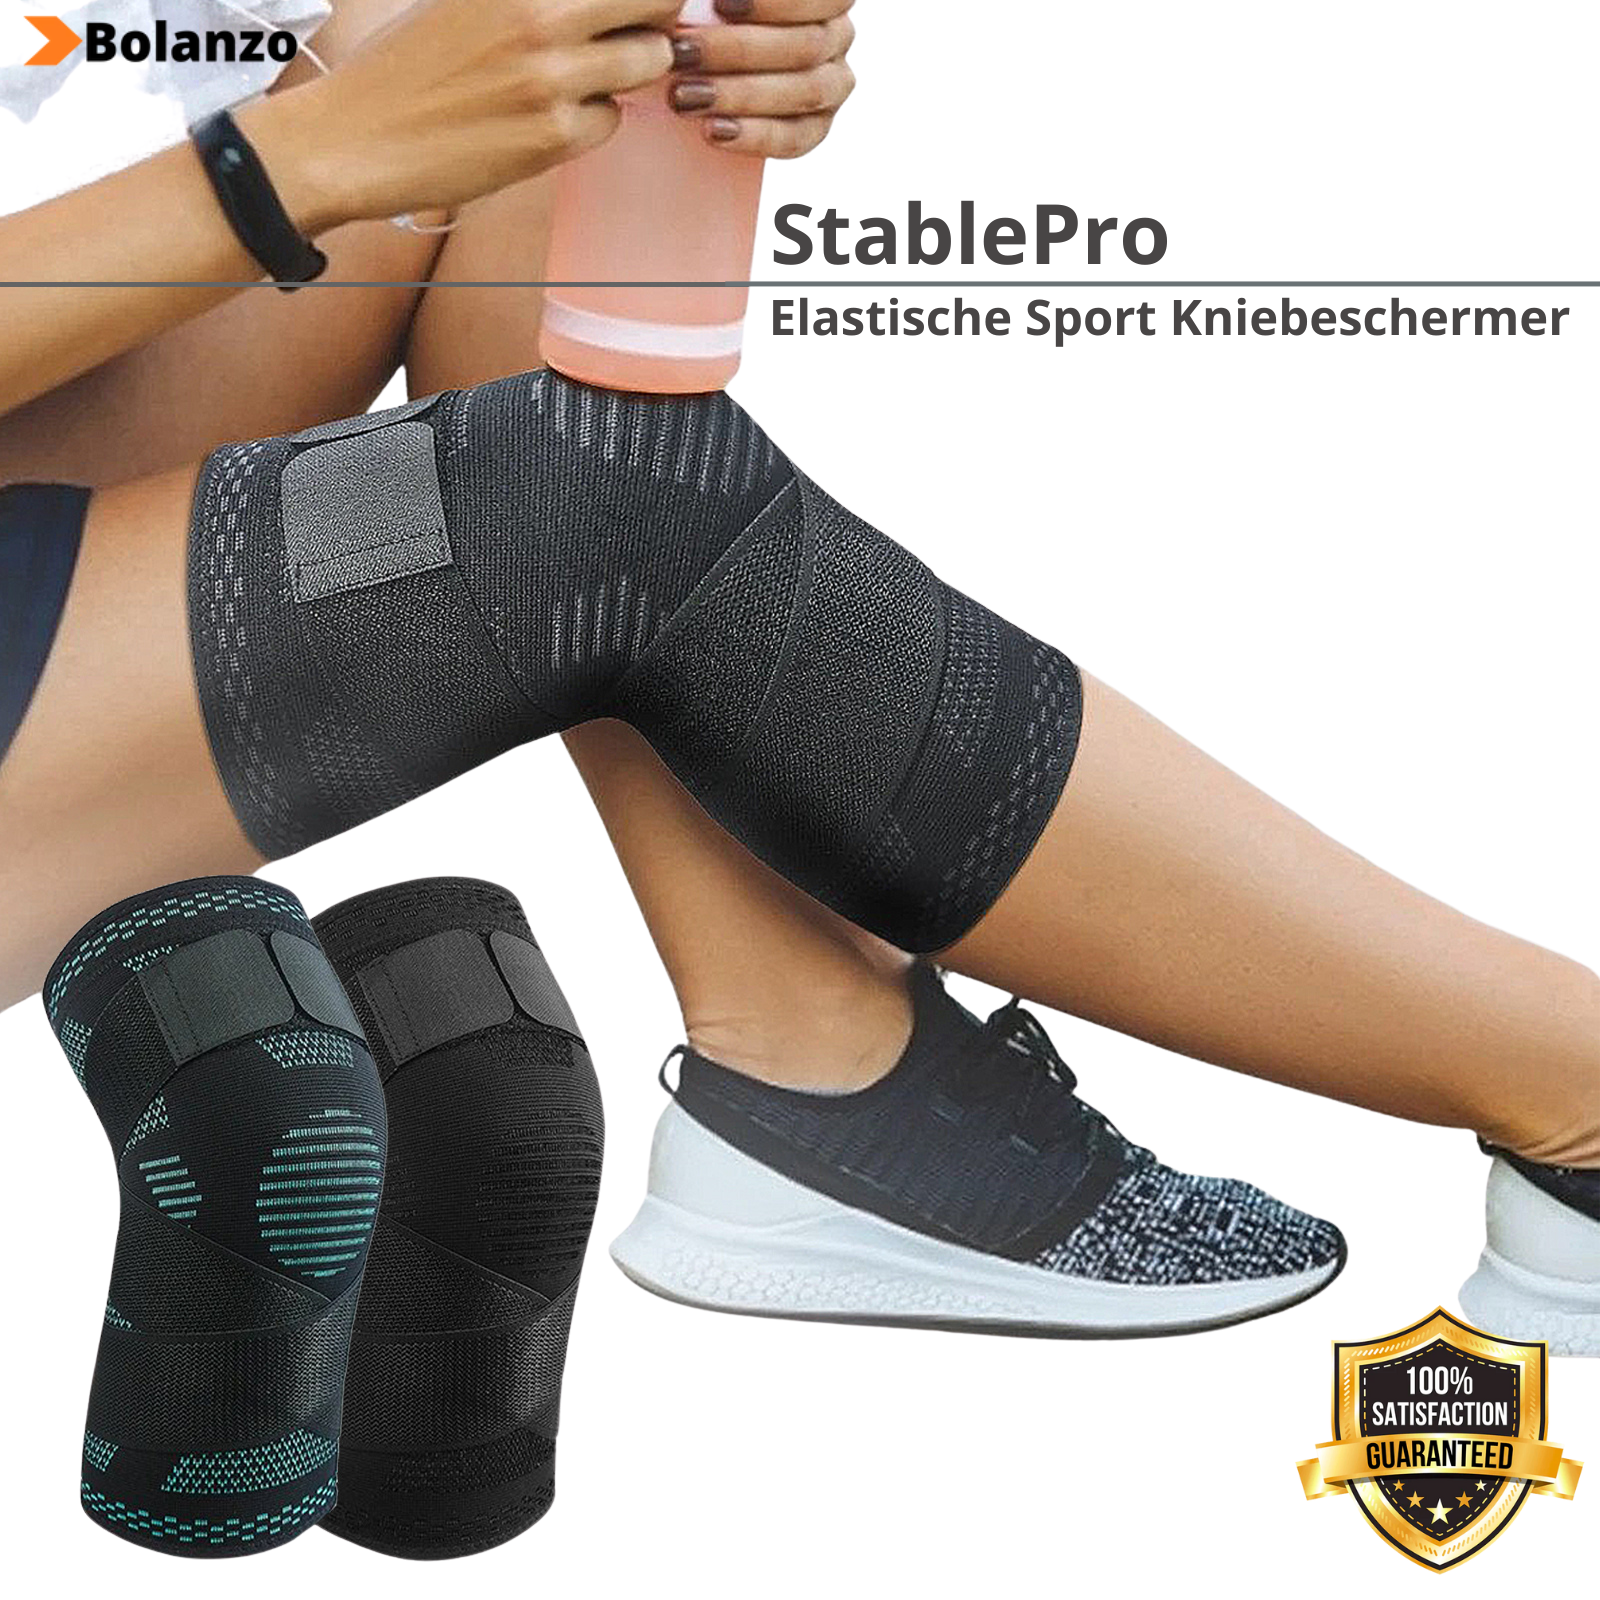 StablePro | Elastische Sport Kniebeschermer